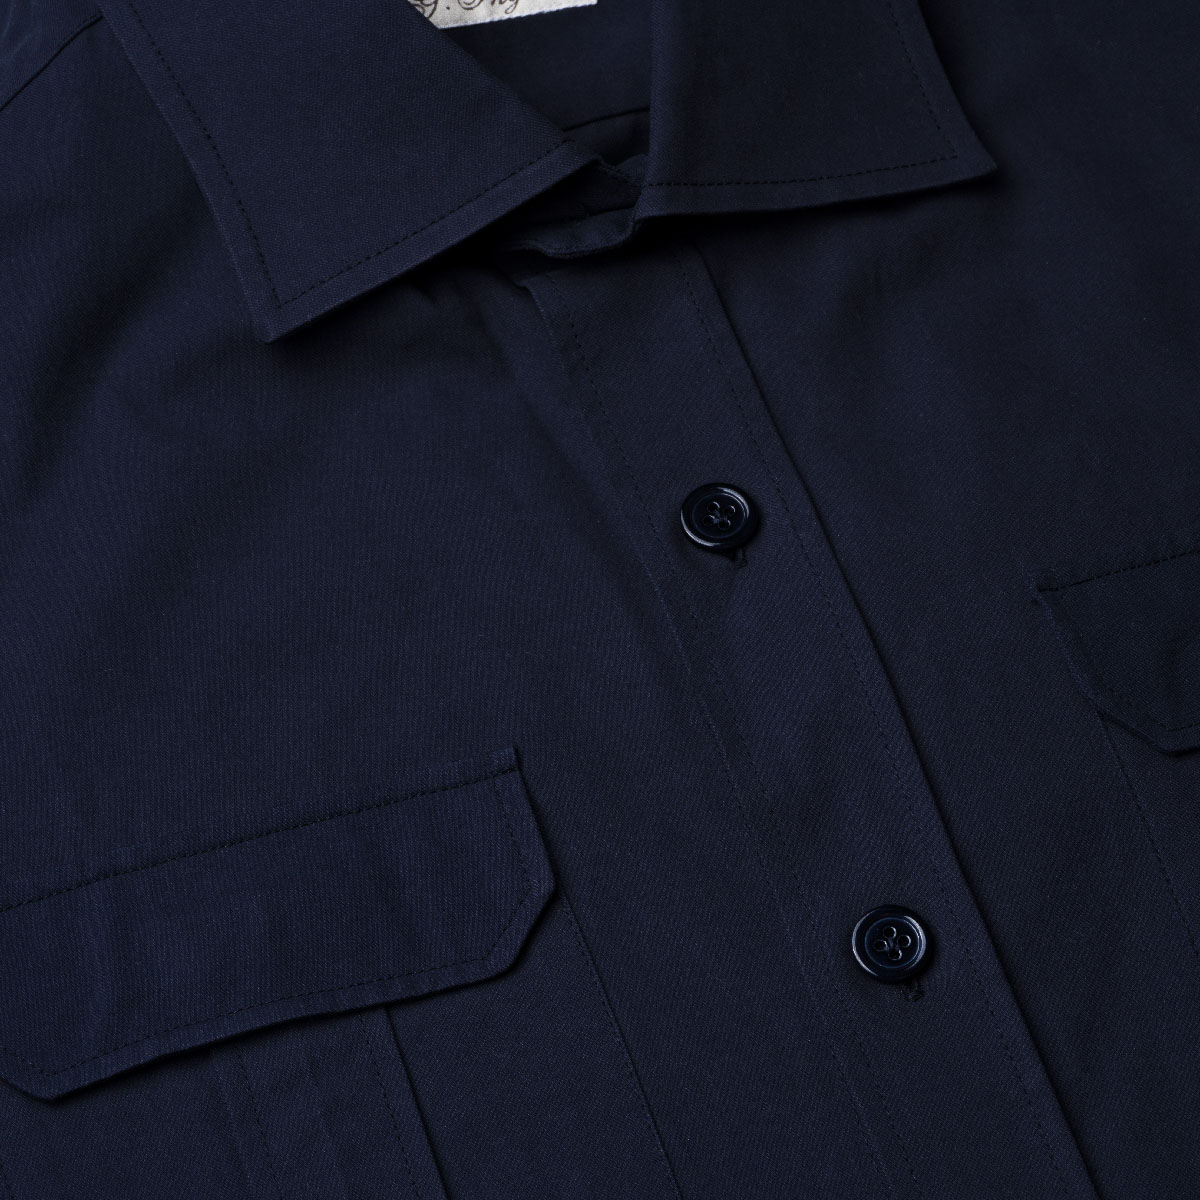 Cotton Overshirt in Navy G. Inglese on sale 2022 2